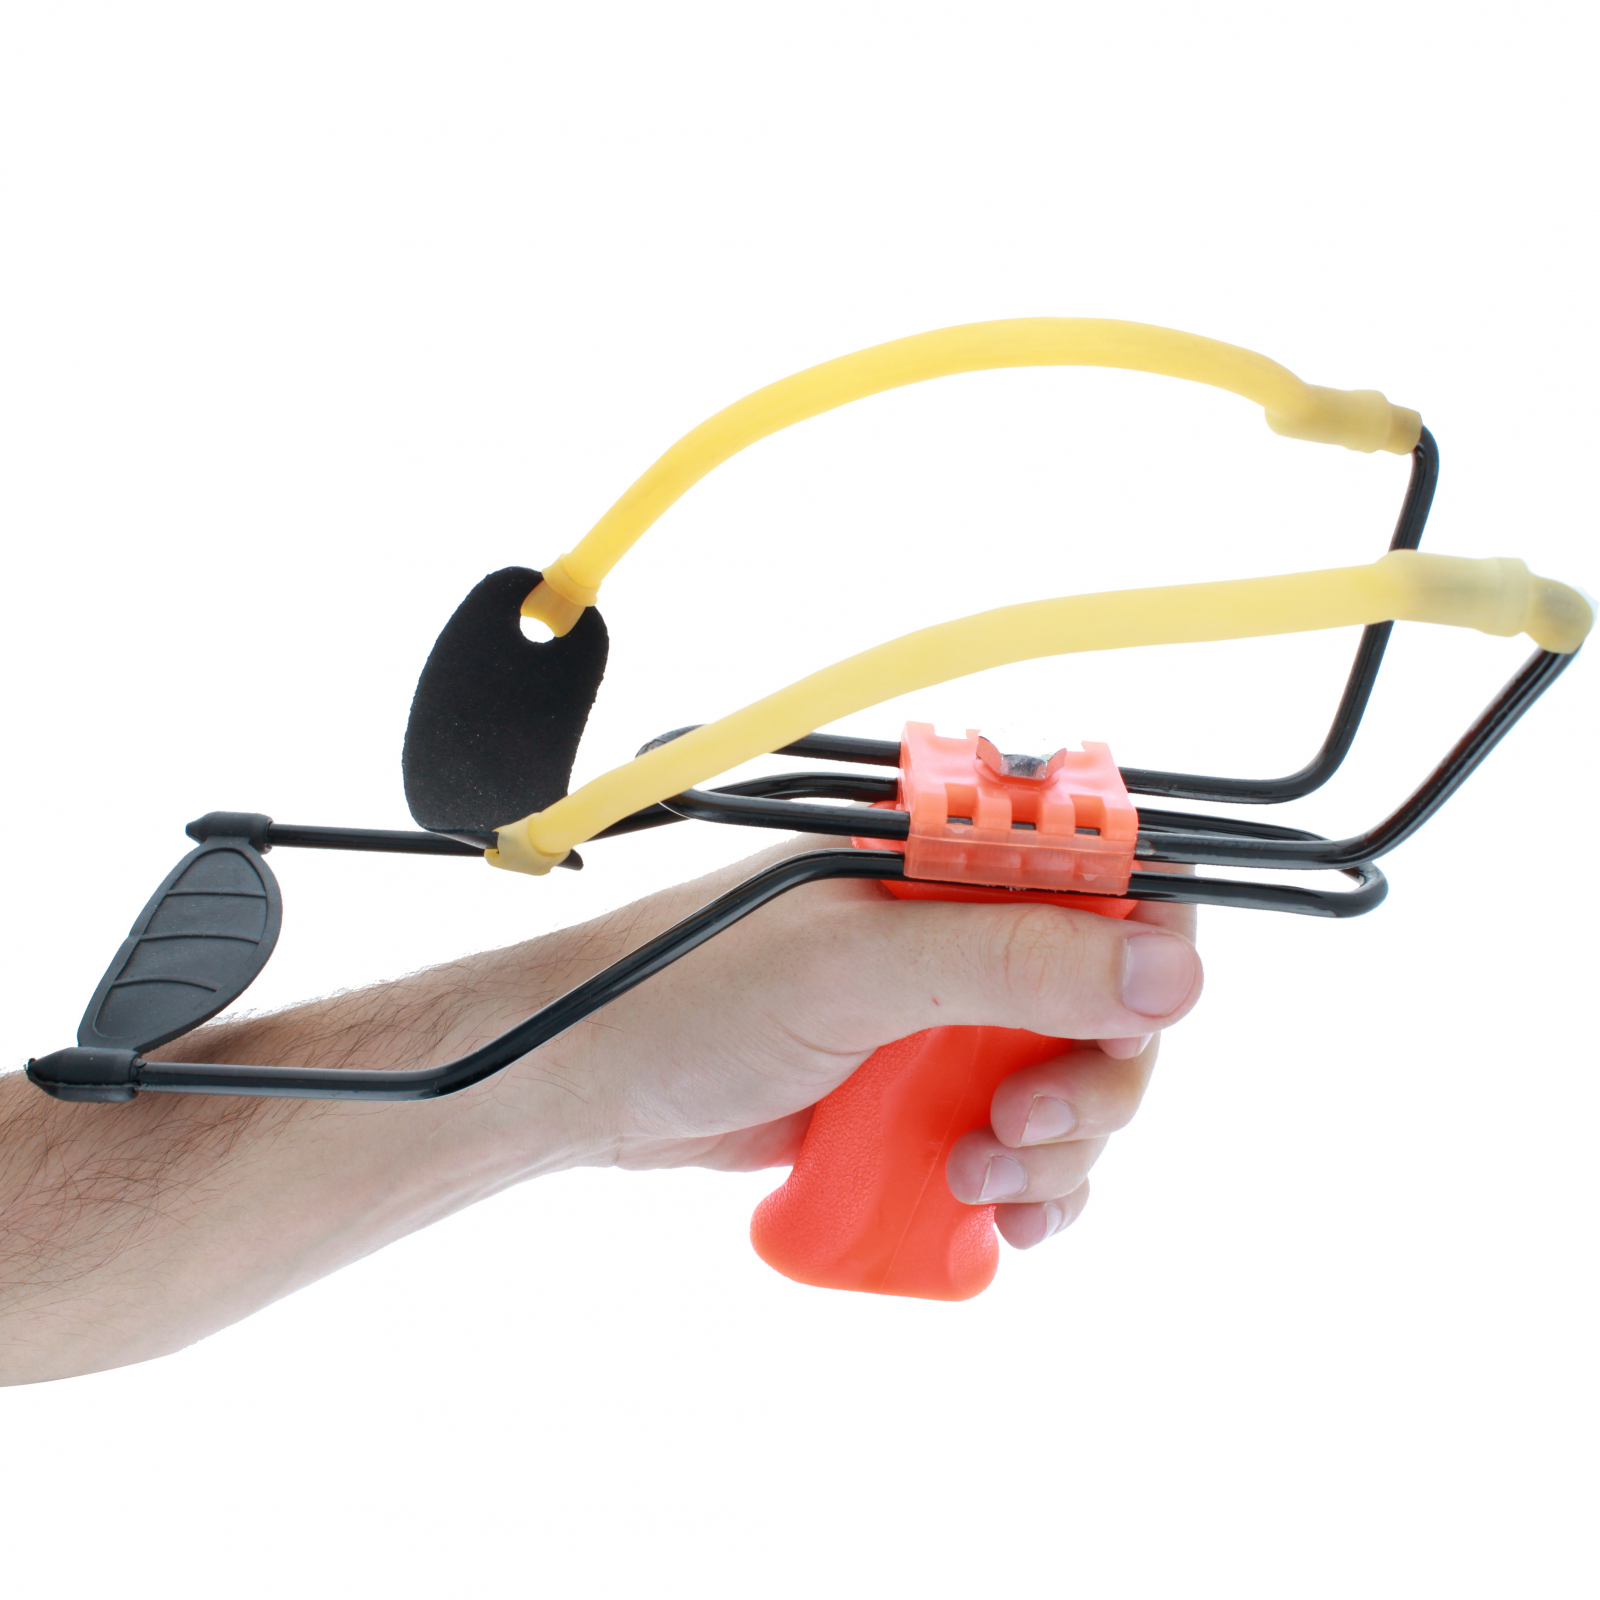 ASR Outdoor Wrist Brace Slingshot with Adjustable Iron Frame - Ammo Included